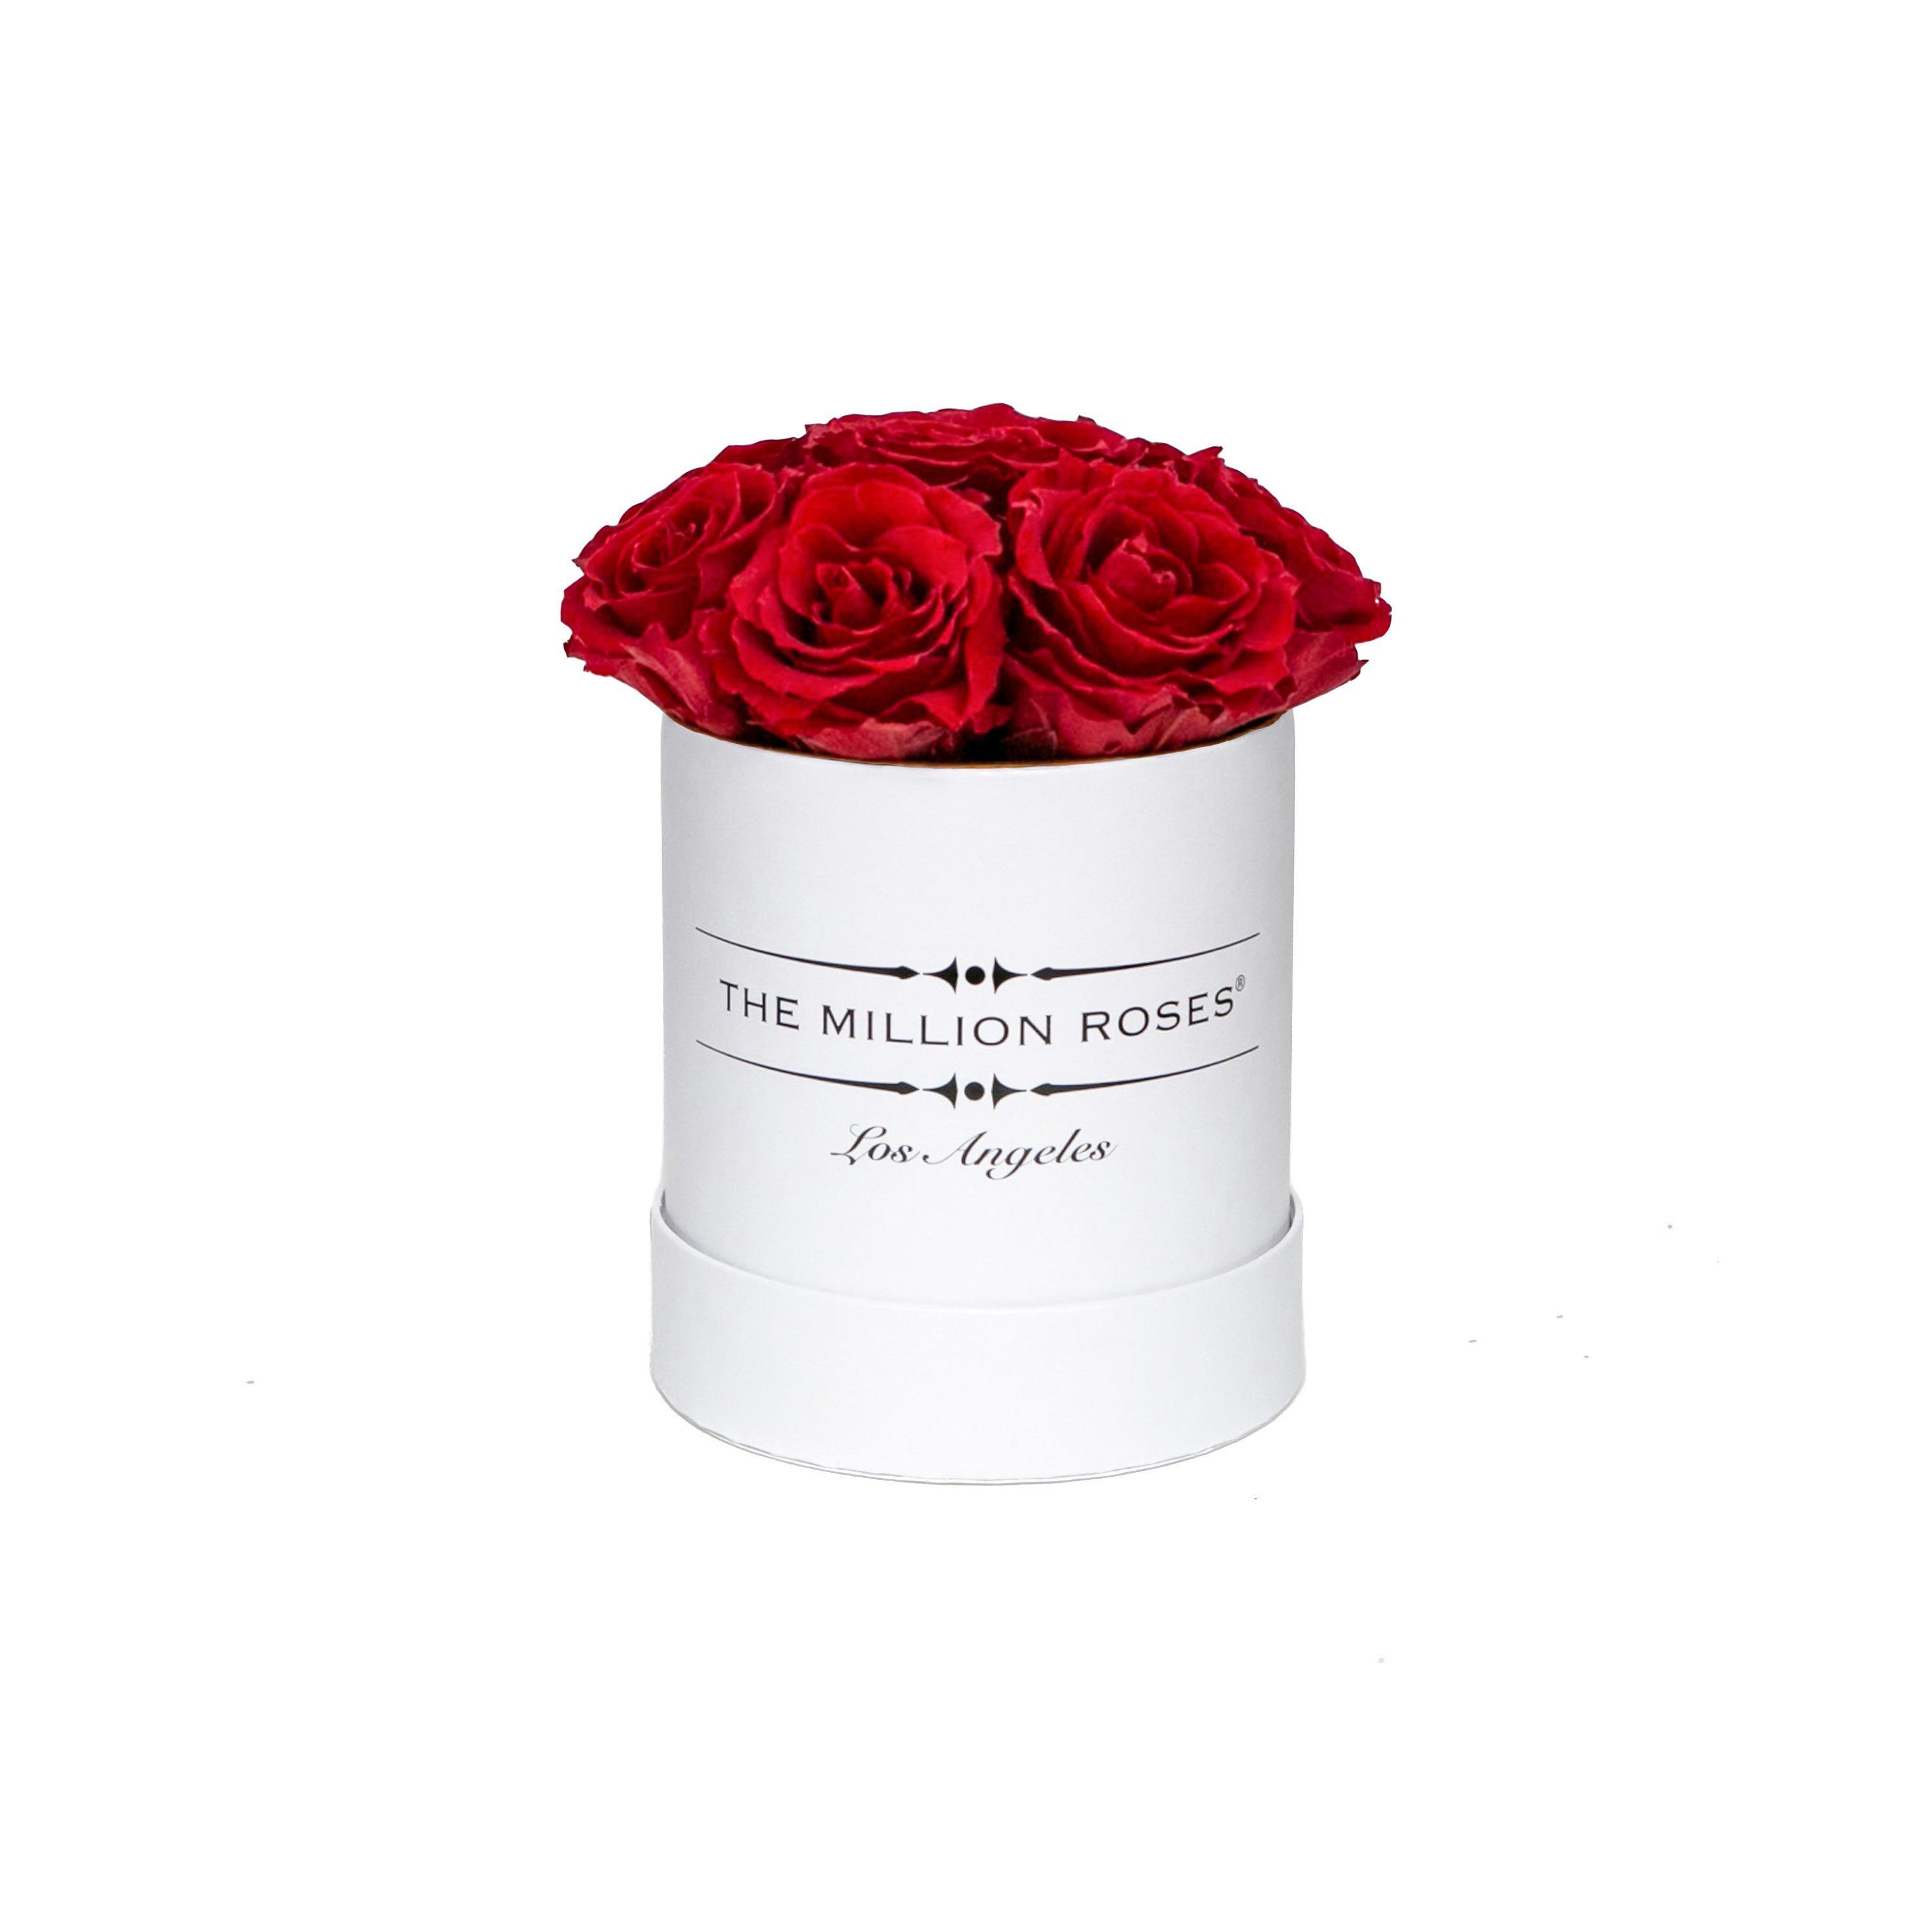 the million Basic+ box - white - red ETERNITY+ roses red eternity roses - the million roses